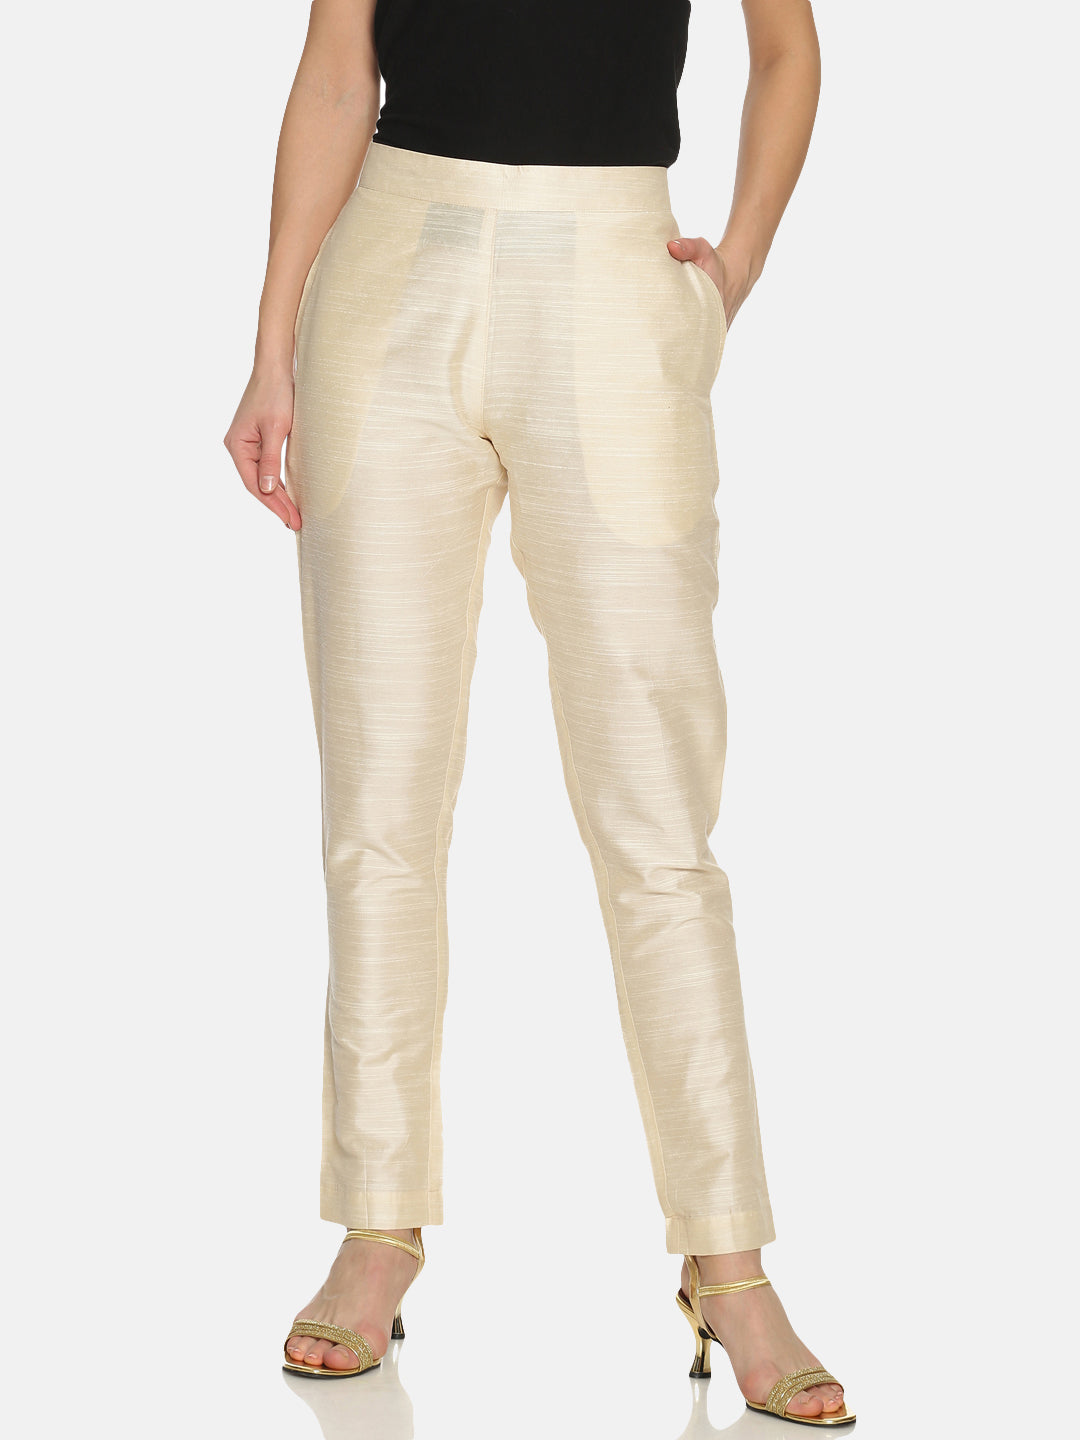 NWT Suistudio Silk Linen Off White Sand Stripe Lane Classic Trouser Pants  Size 4 | eBay